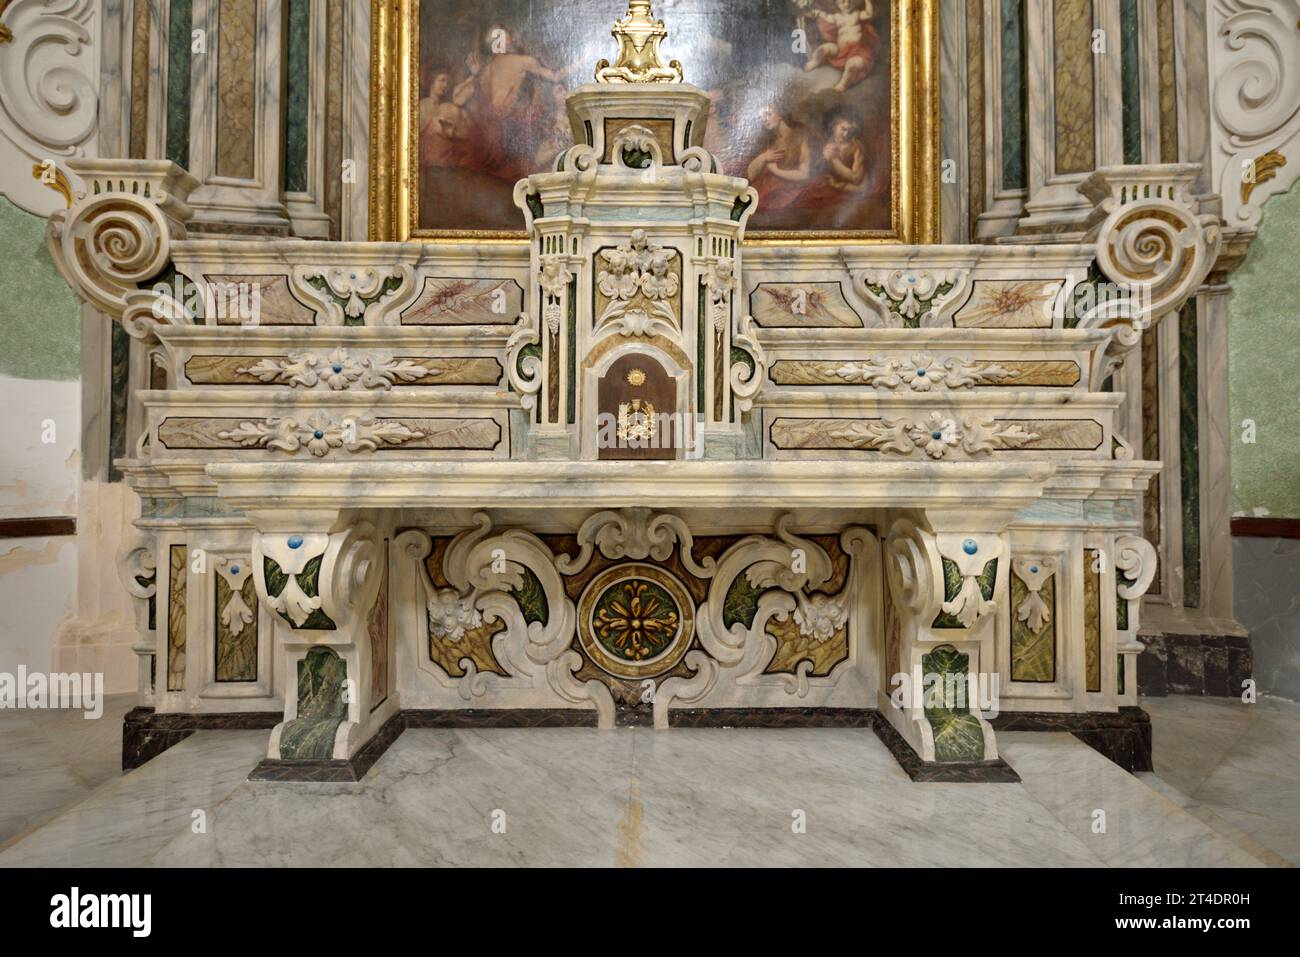 Baroque altar, Purgatory church interior, Matera, Basilicata, Italy Stock Photo